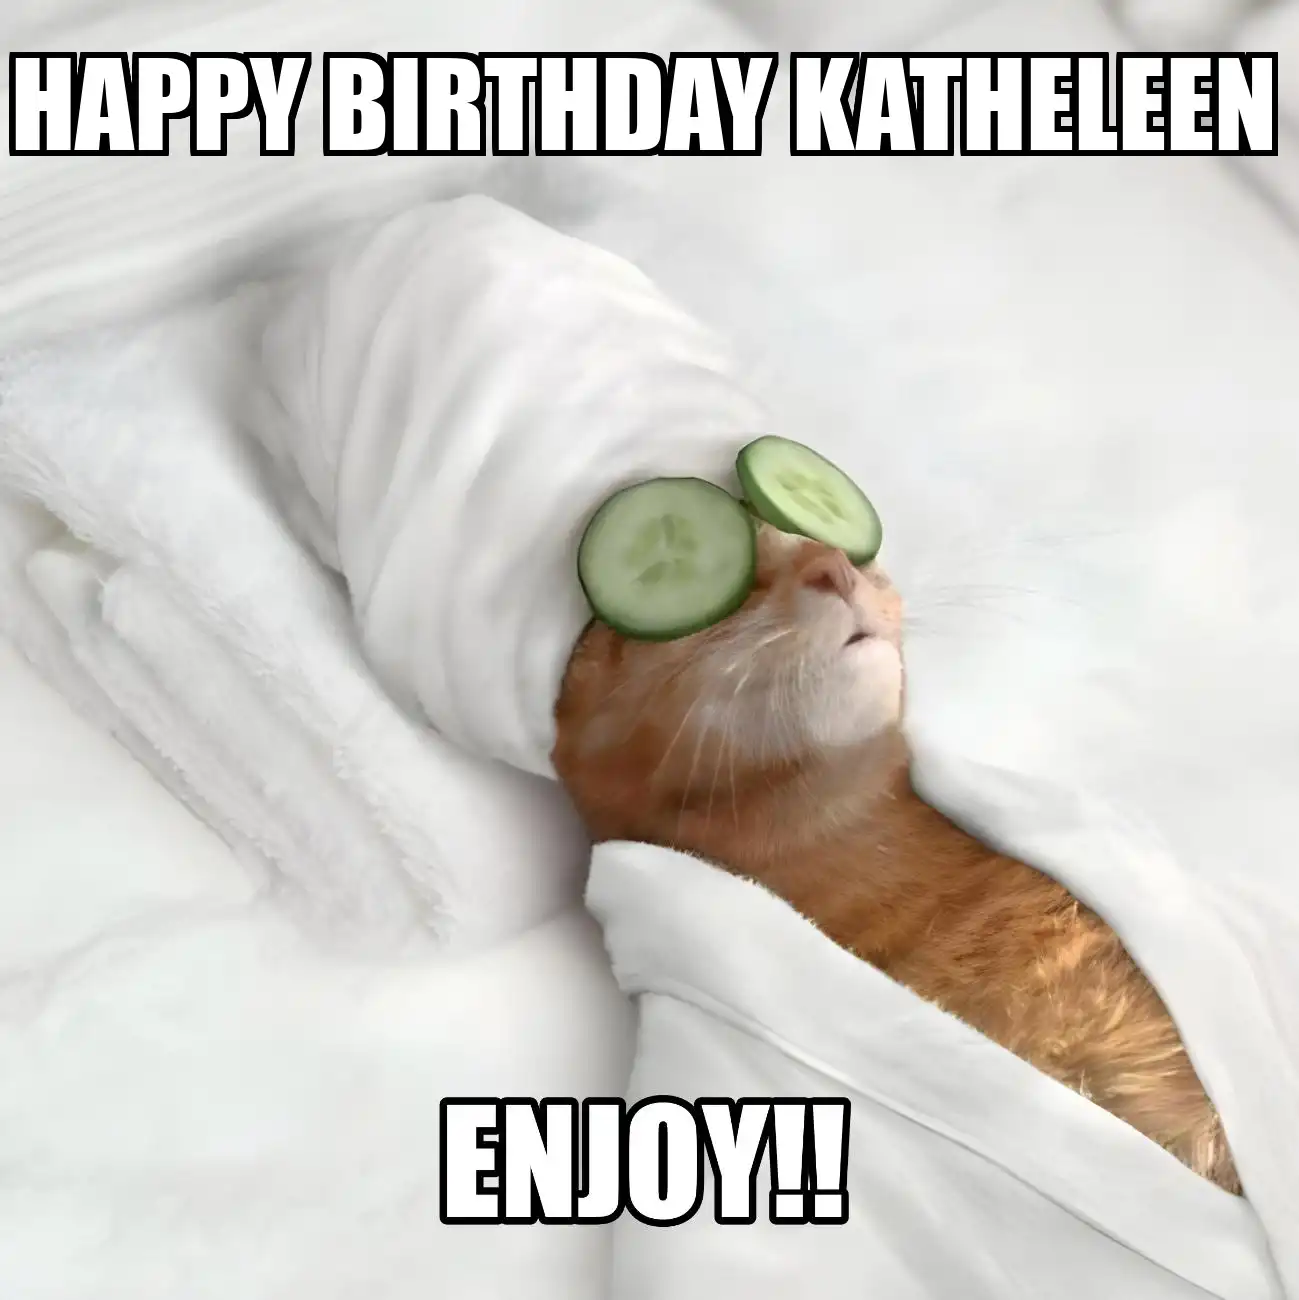 Happy Birthday Katheleen Enjoy Cat Meme